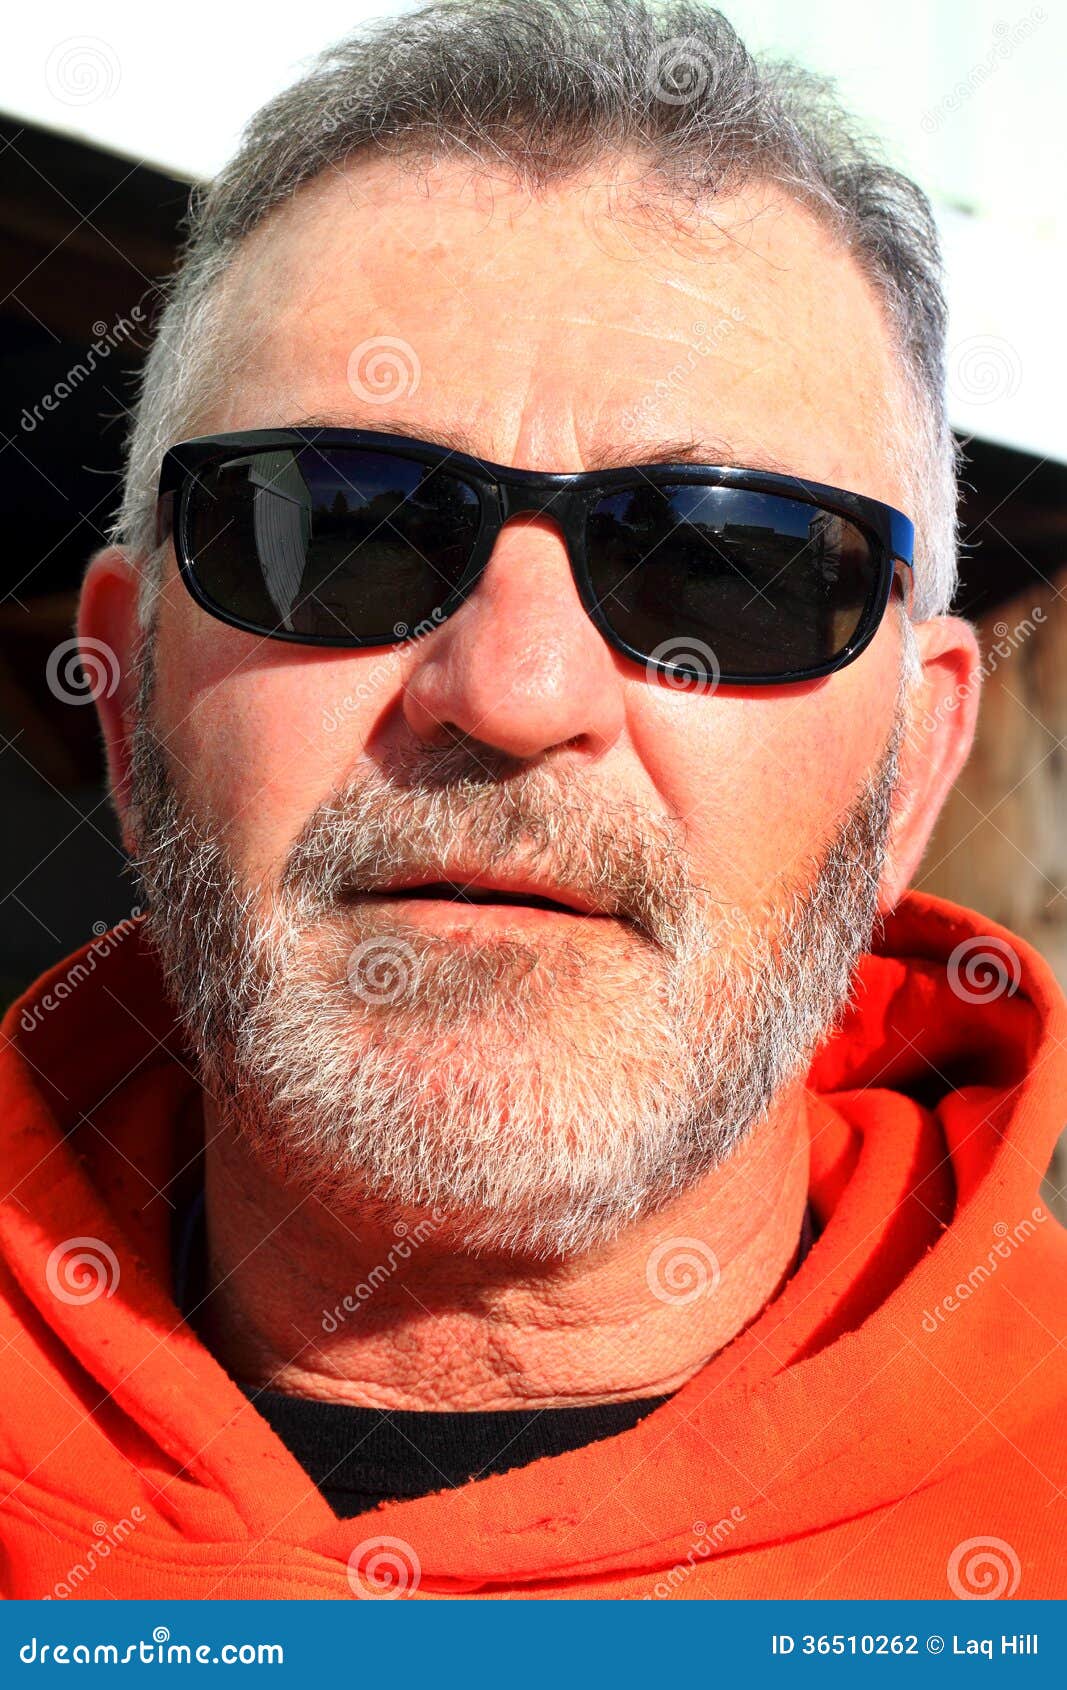 unshaven laborer wearing sunglasses